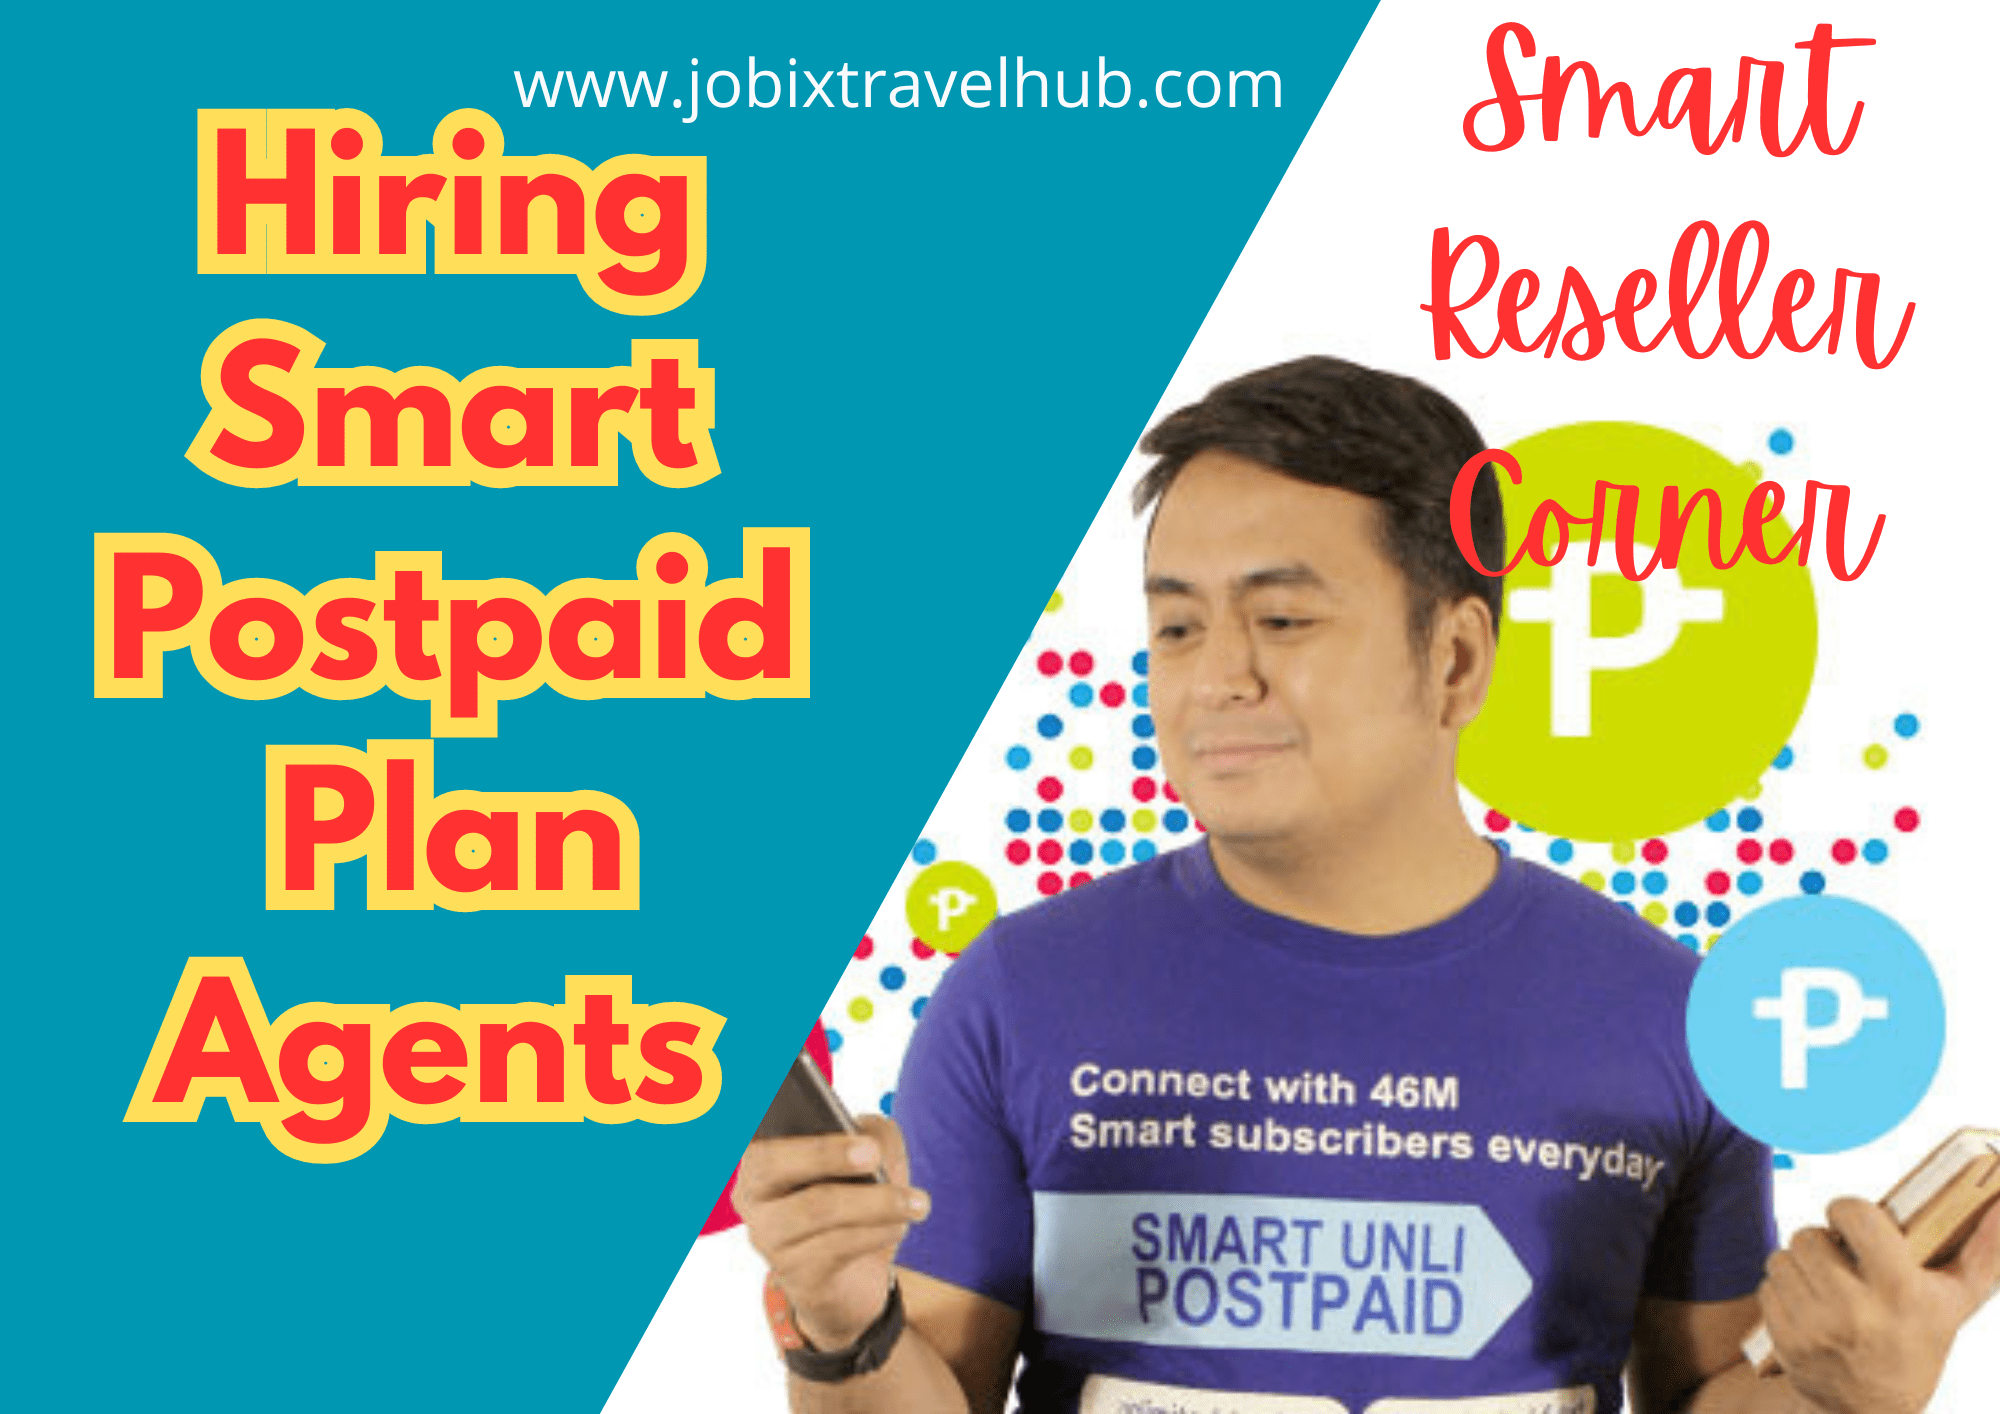 Hiring Freelancers - Jobs in the Philippines. Smart Postplan Agents